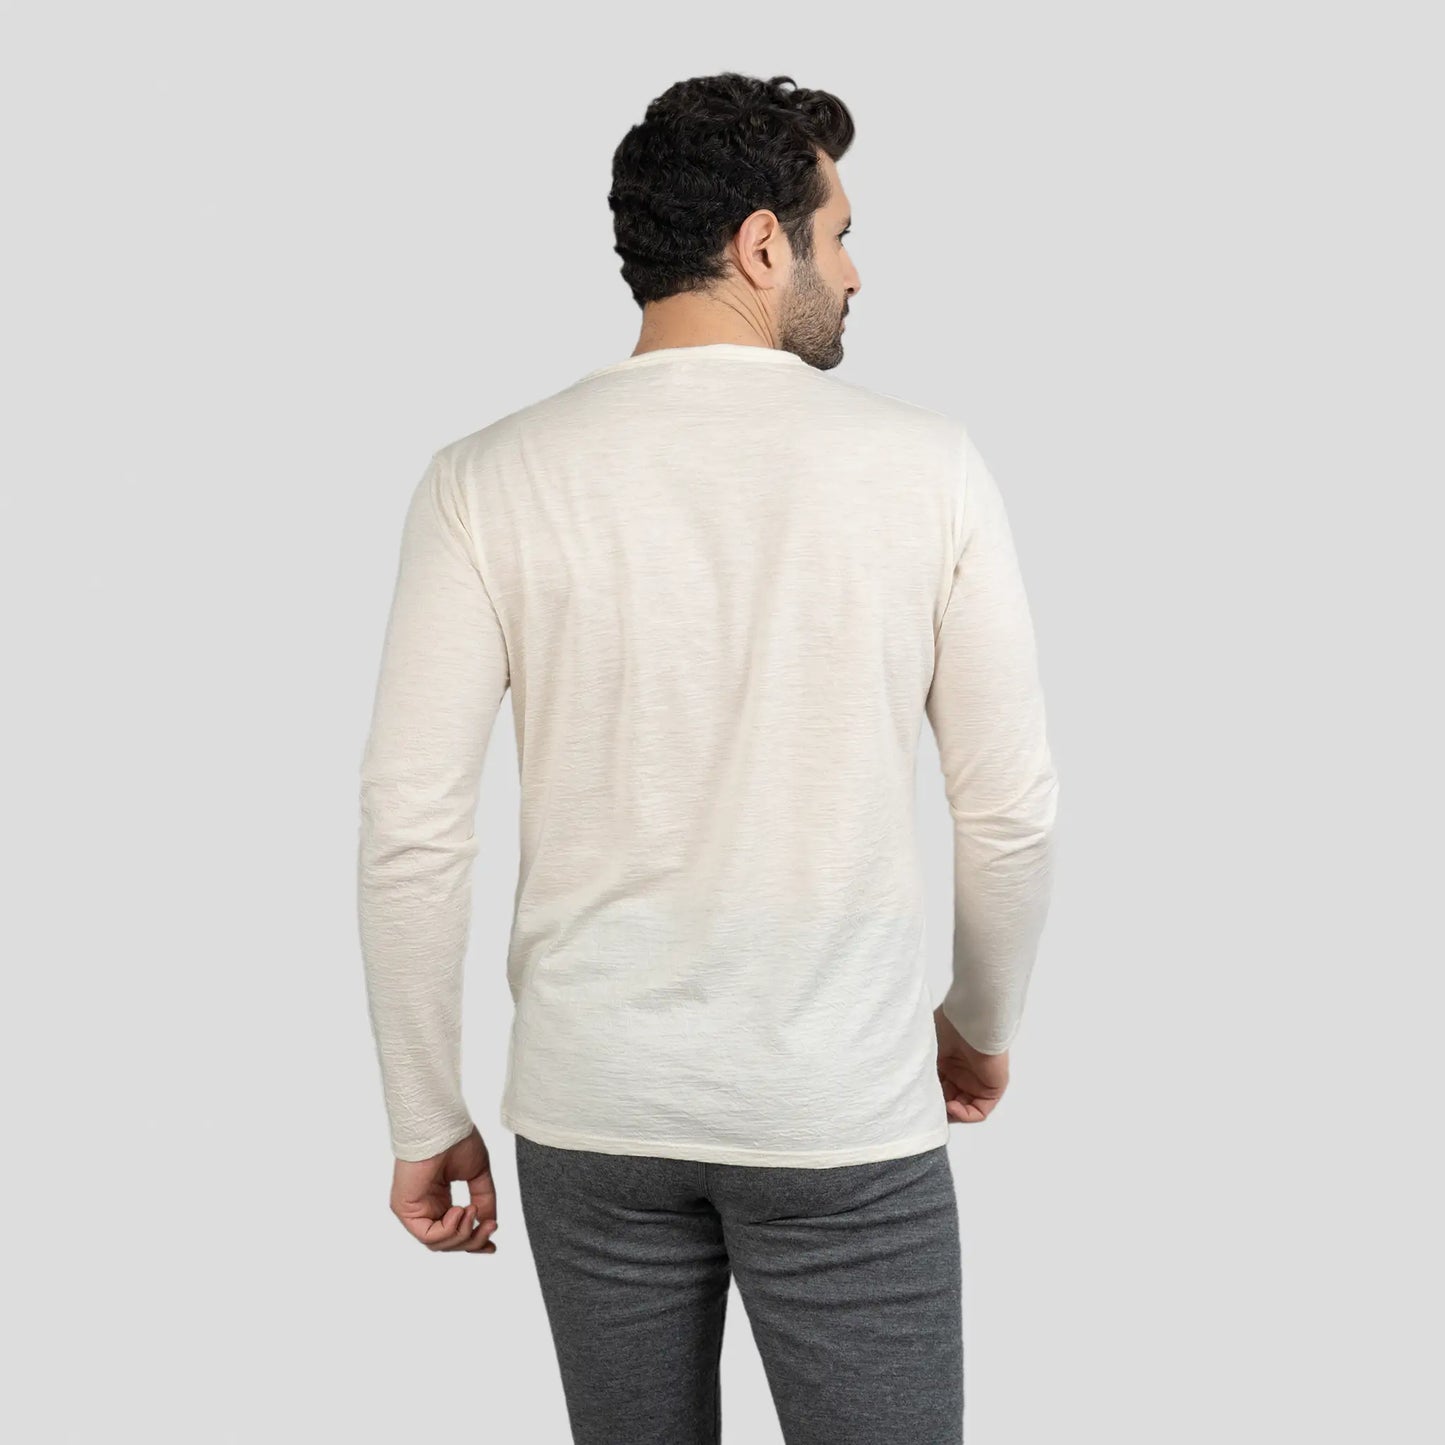 Men's Alpaca Wool Long Sleeve Base Layer: 160 Ultralight color Natural White